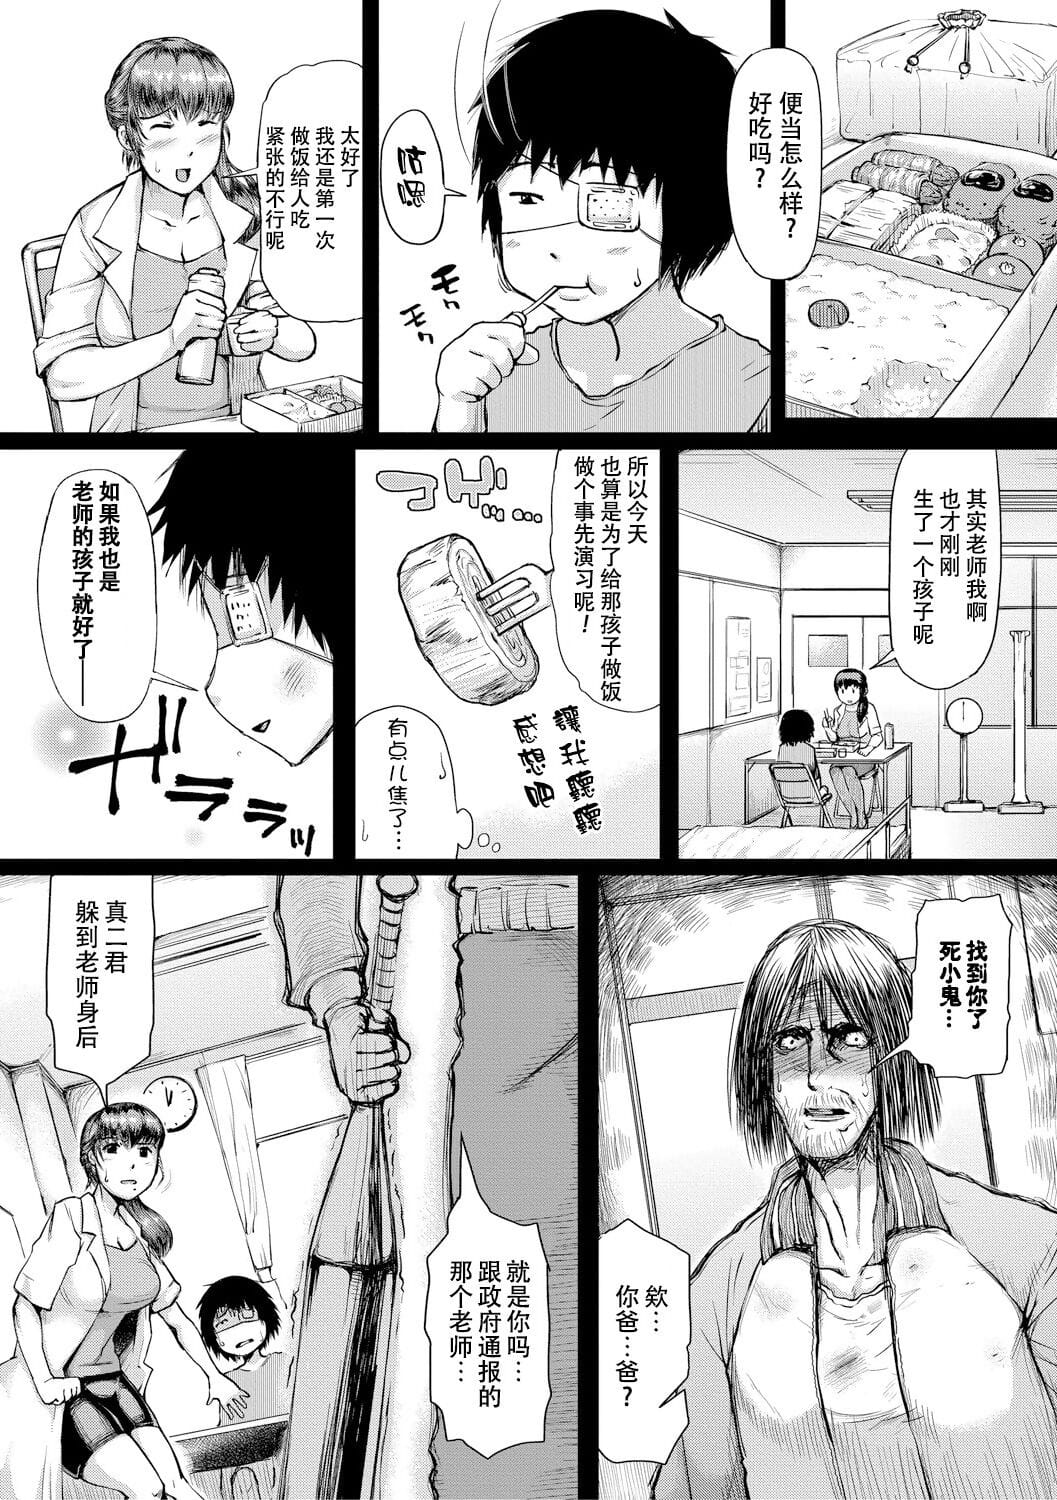 Gibo ga Haramu made - part 2 page 1